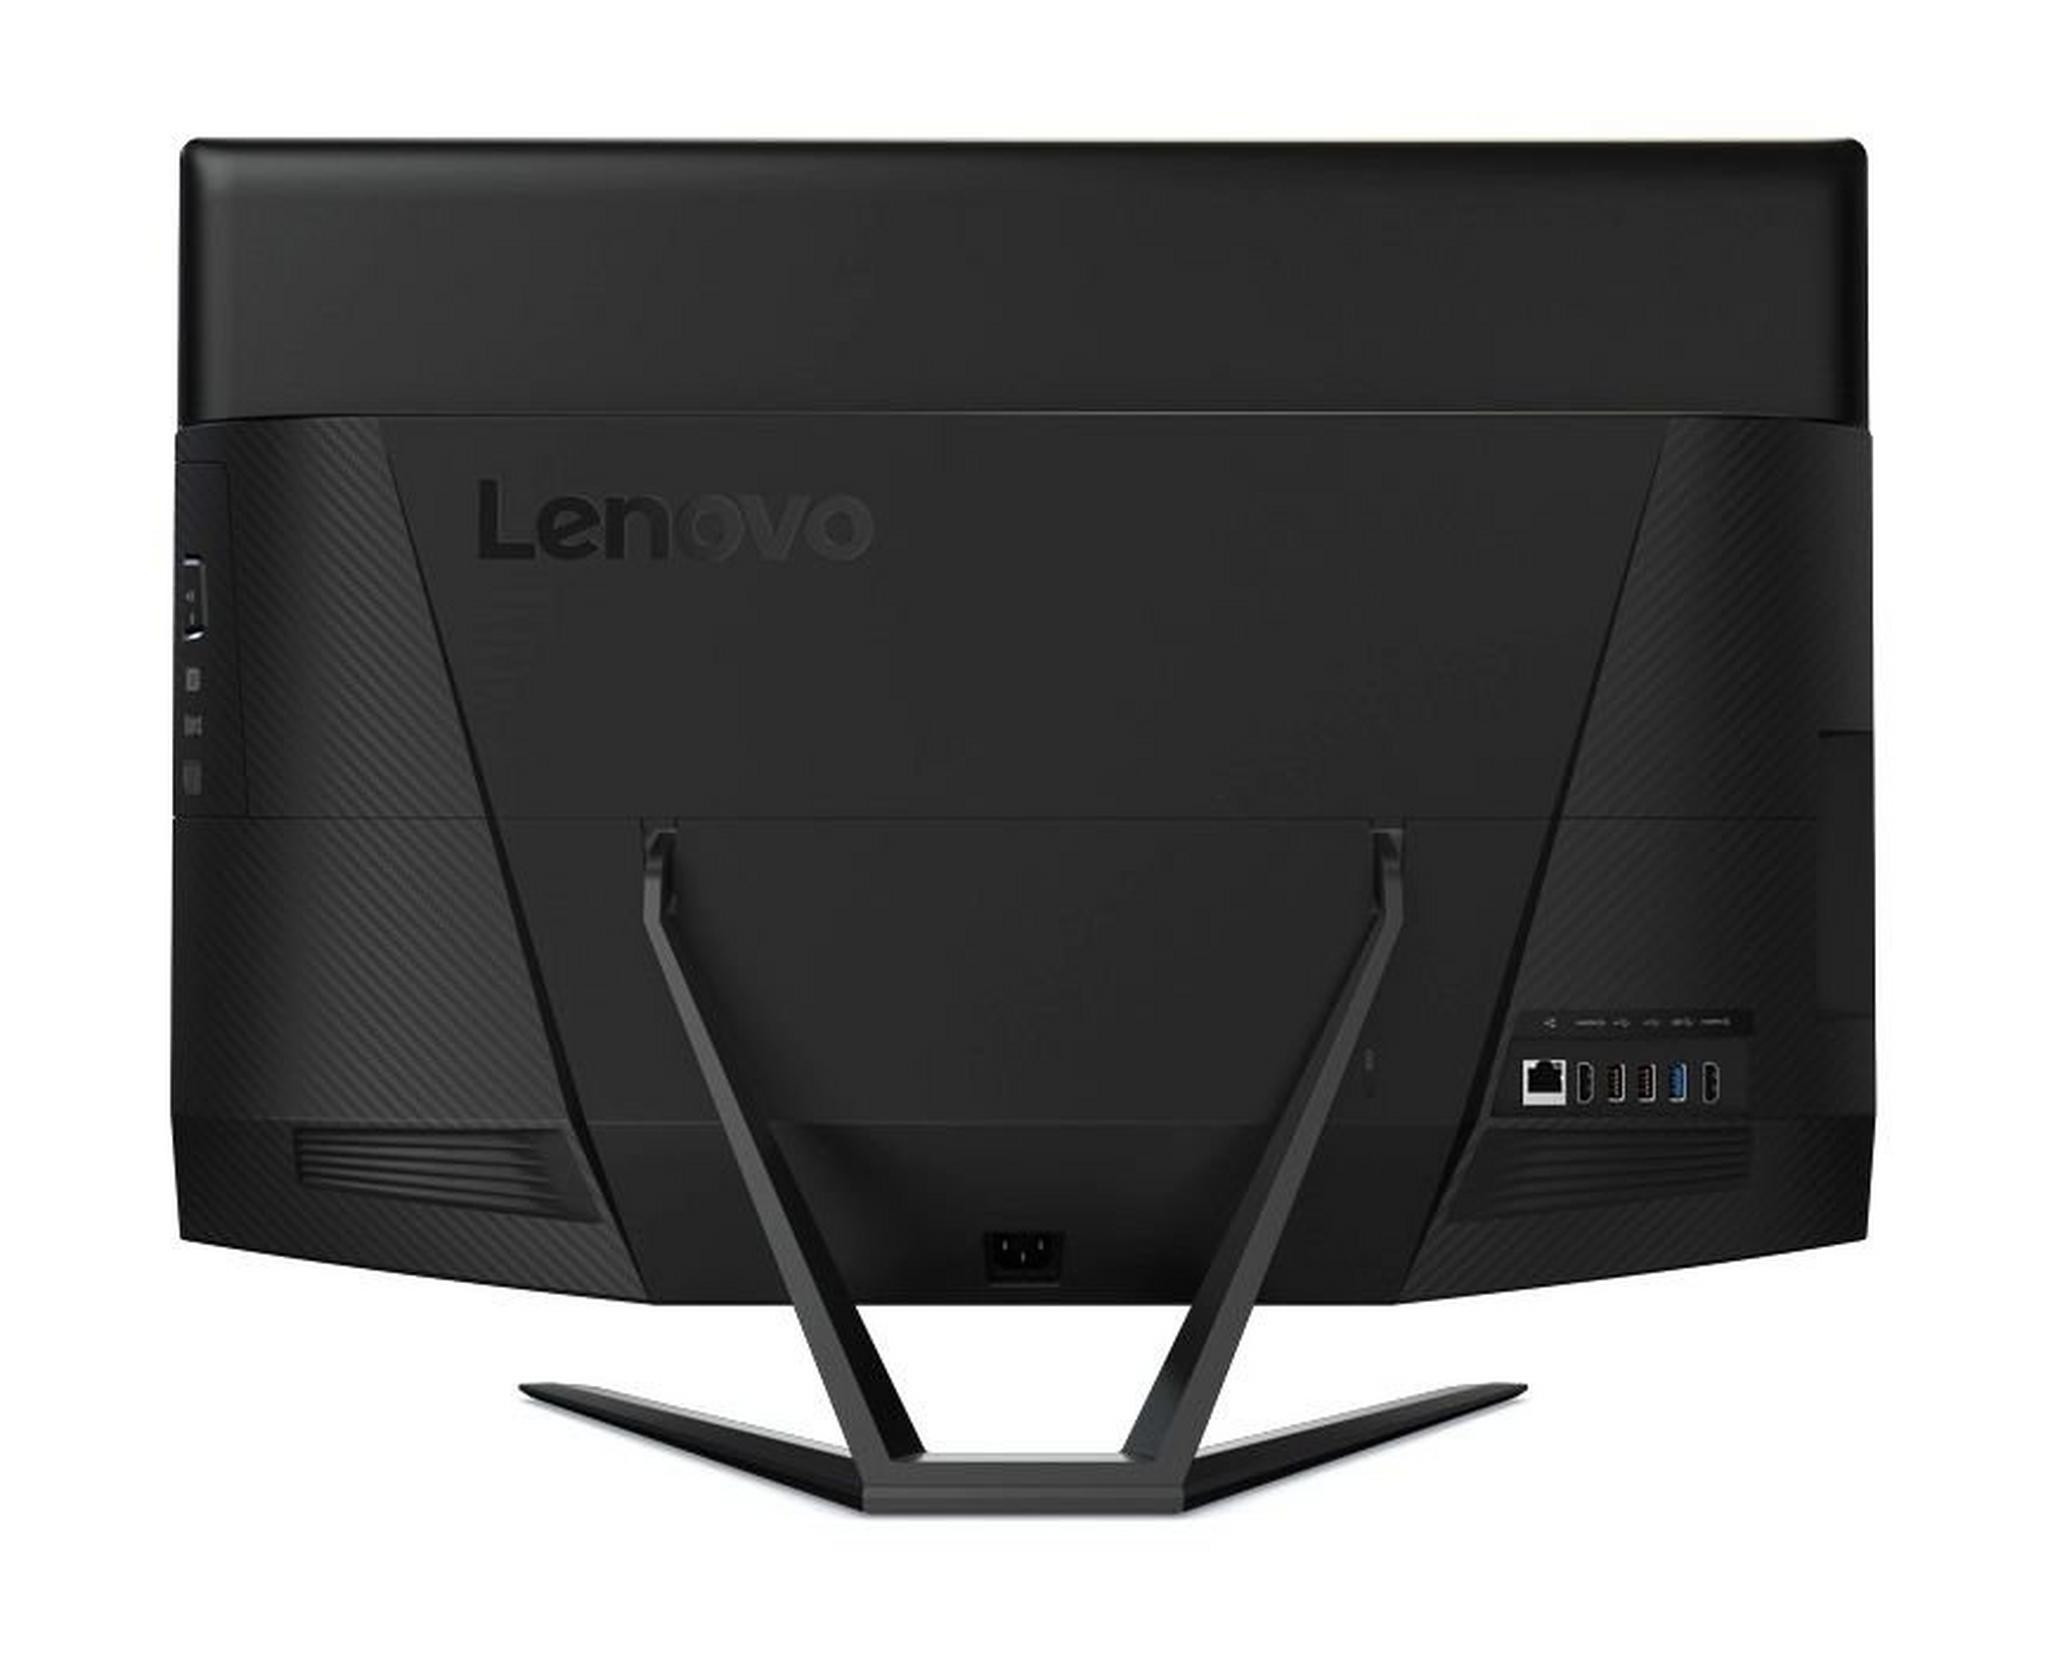 Lenovo IdeaCentre 700 Core i7 16GB RAM 2TB HDD + 8GB SSD 27-inch Touchscreen All-in-One Desktop - Black